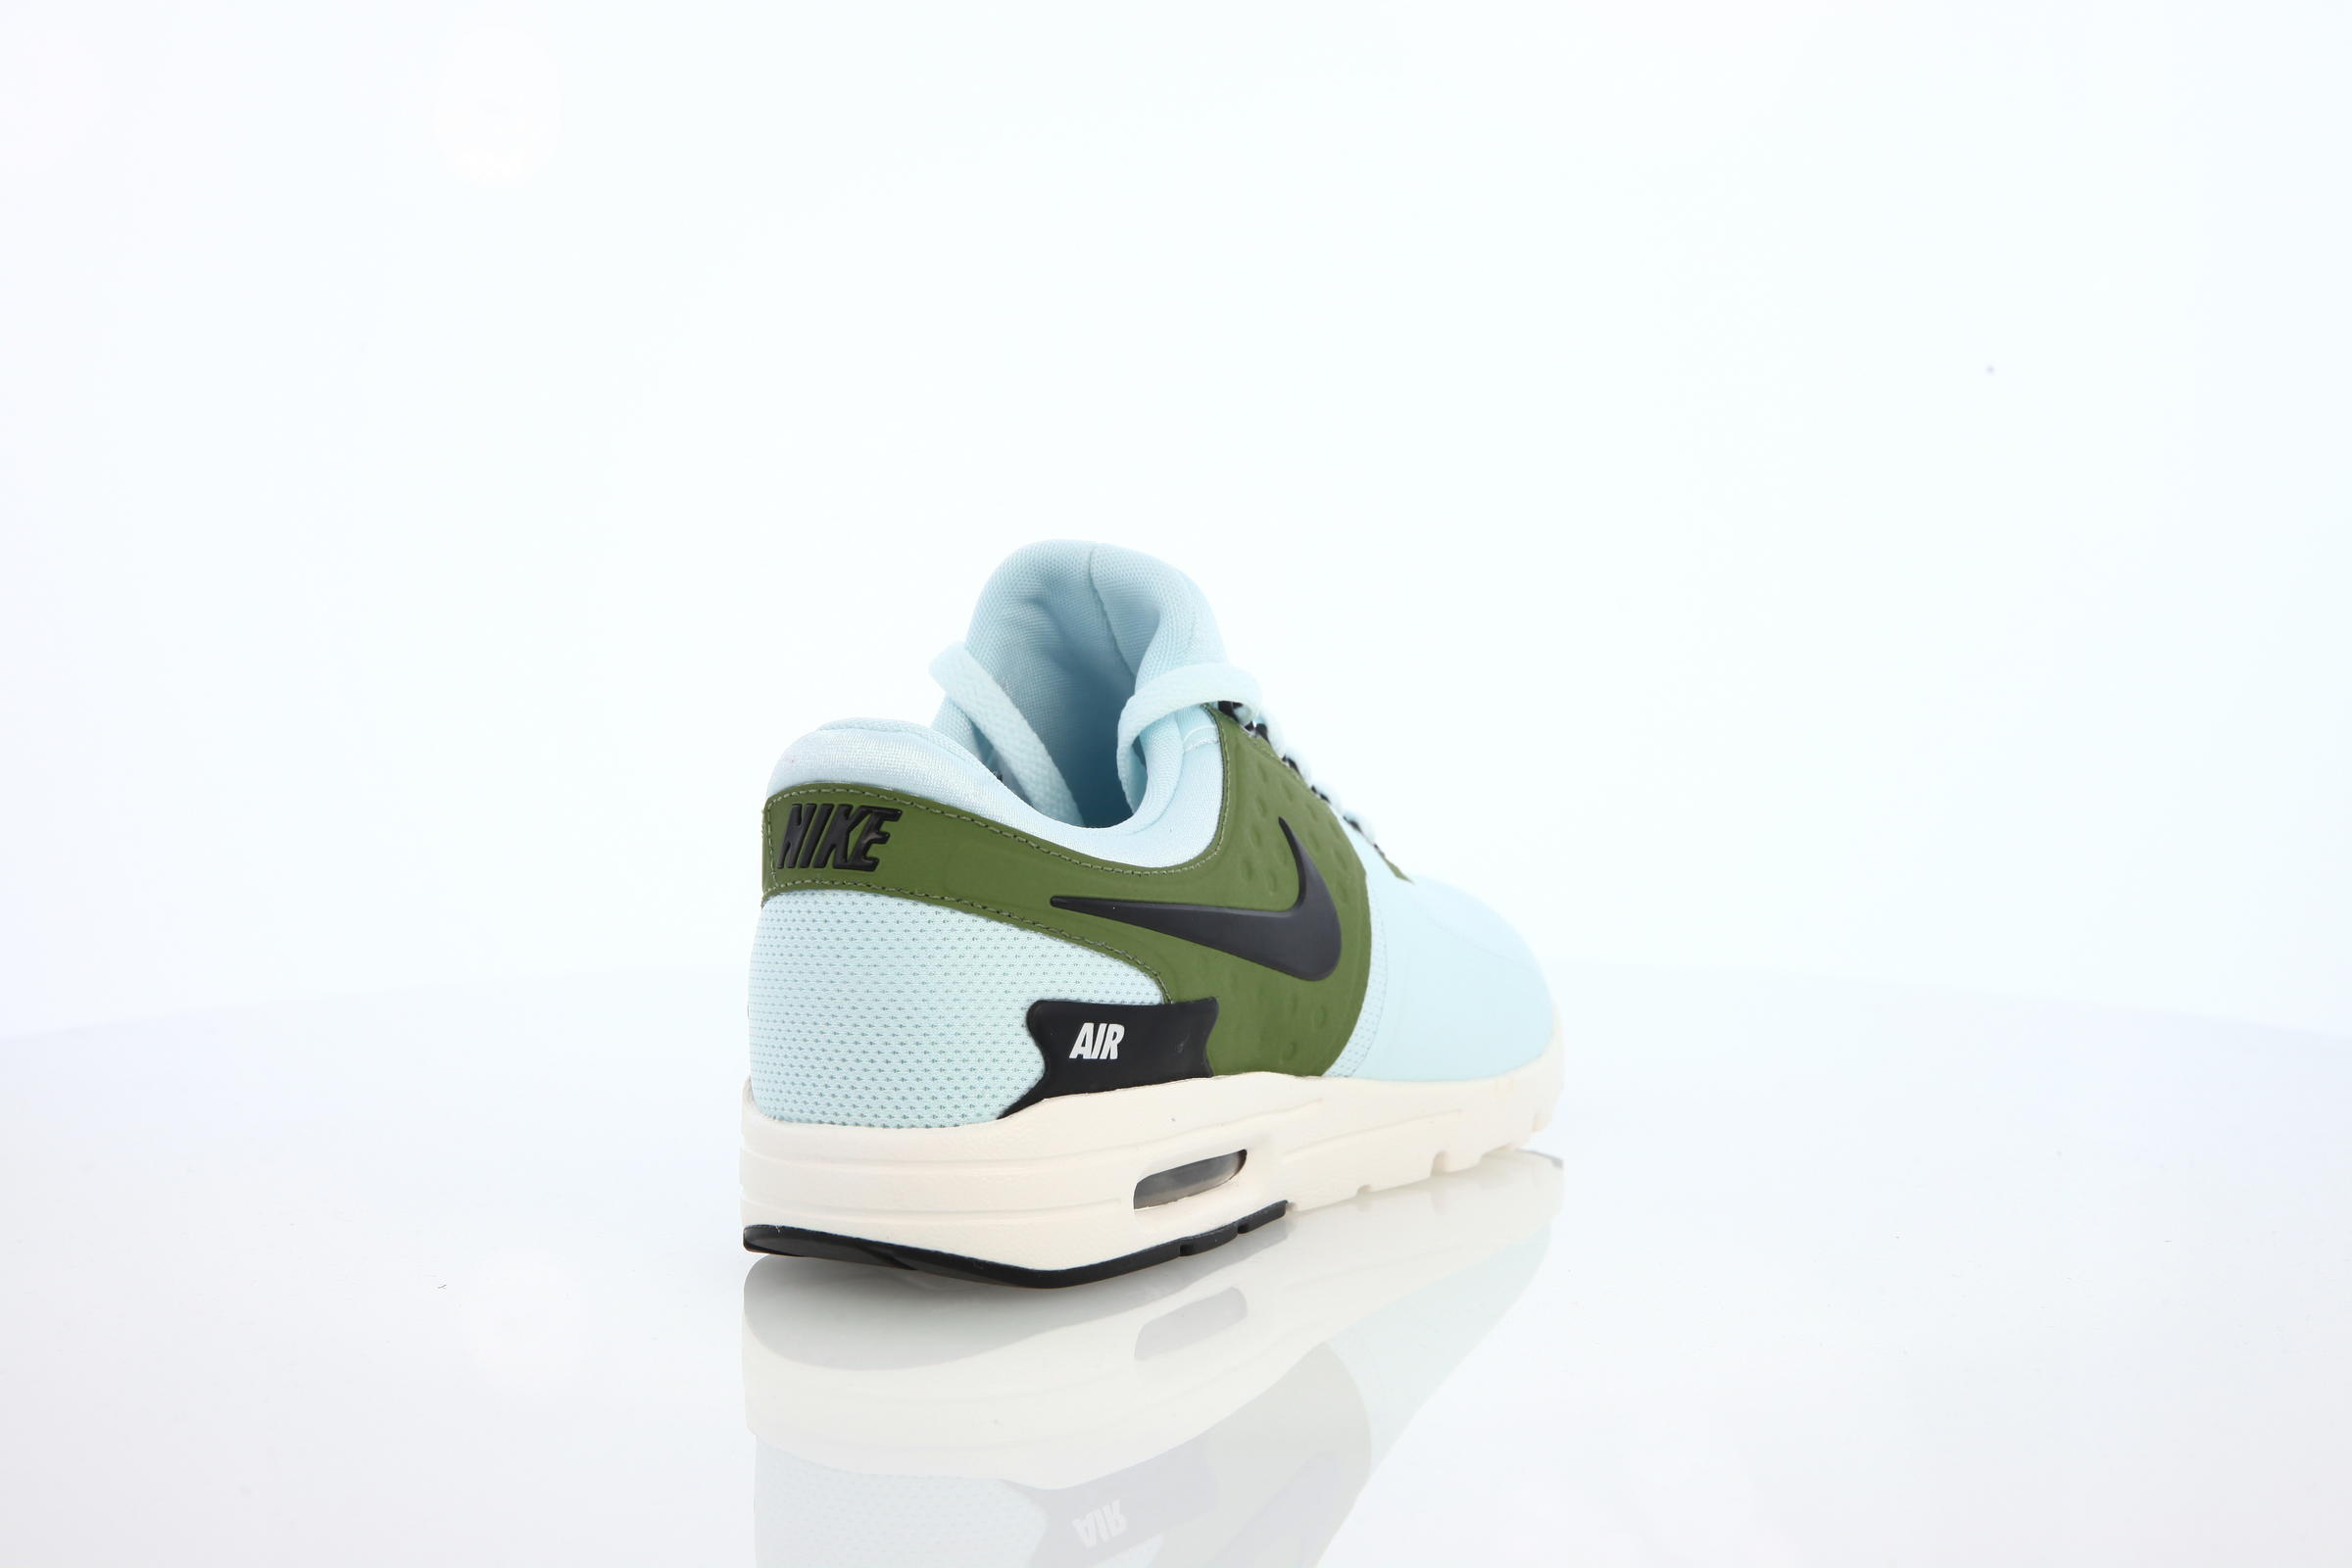 Nike Wmns Air Max Zero "Glacier Blue"